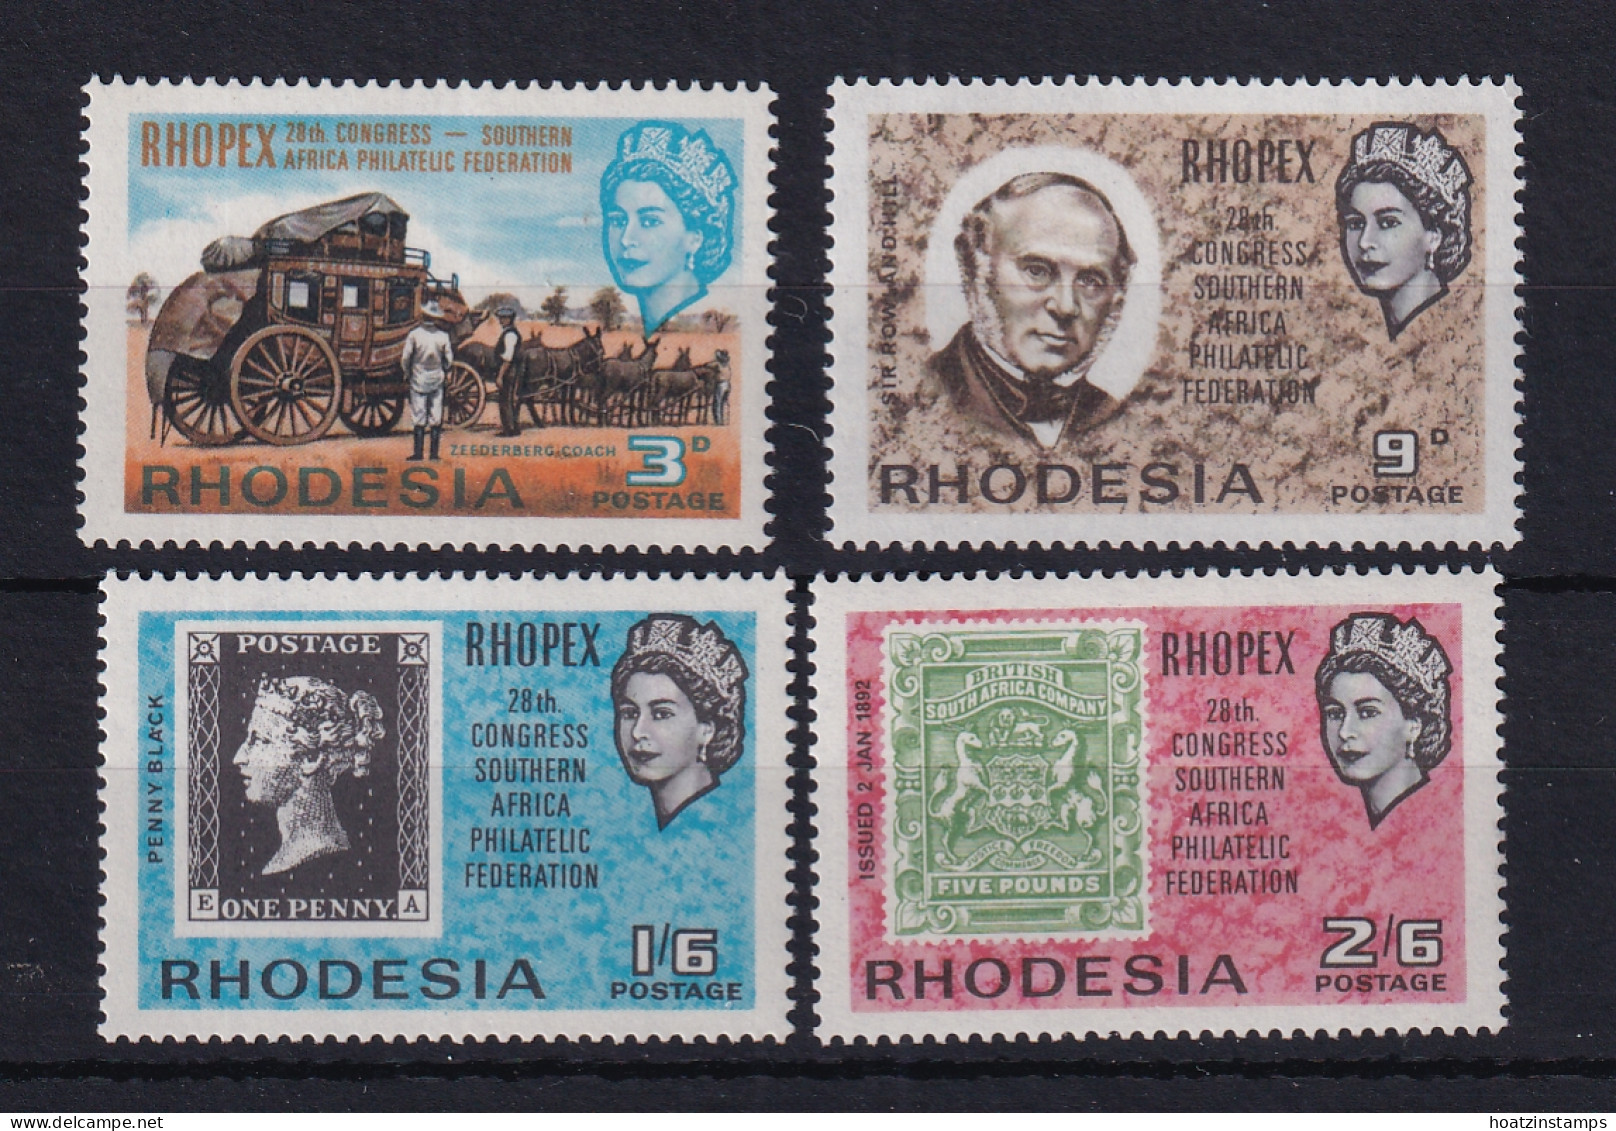 Rhodesia: 1966   28th Congress Of Southern Africa Philtalic Federation (Rhopex')   MNH - Rhodesia (1964-1980)